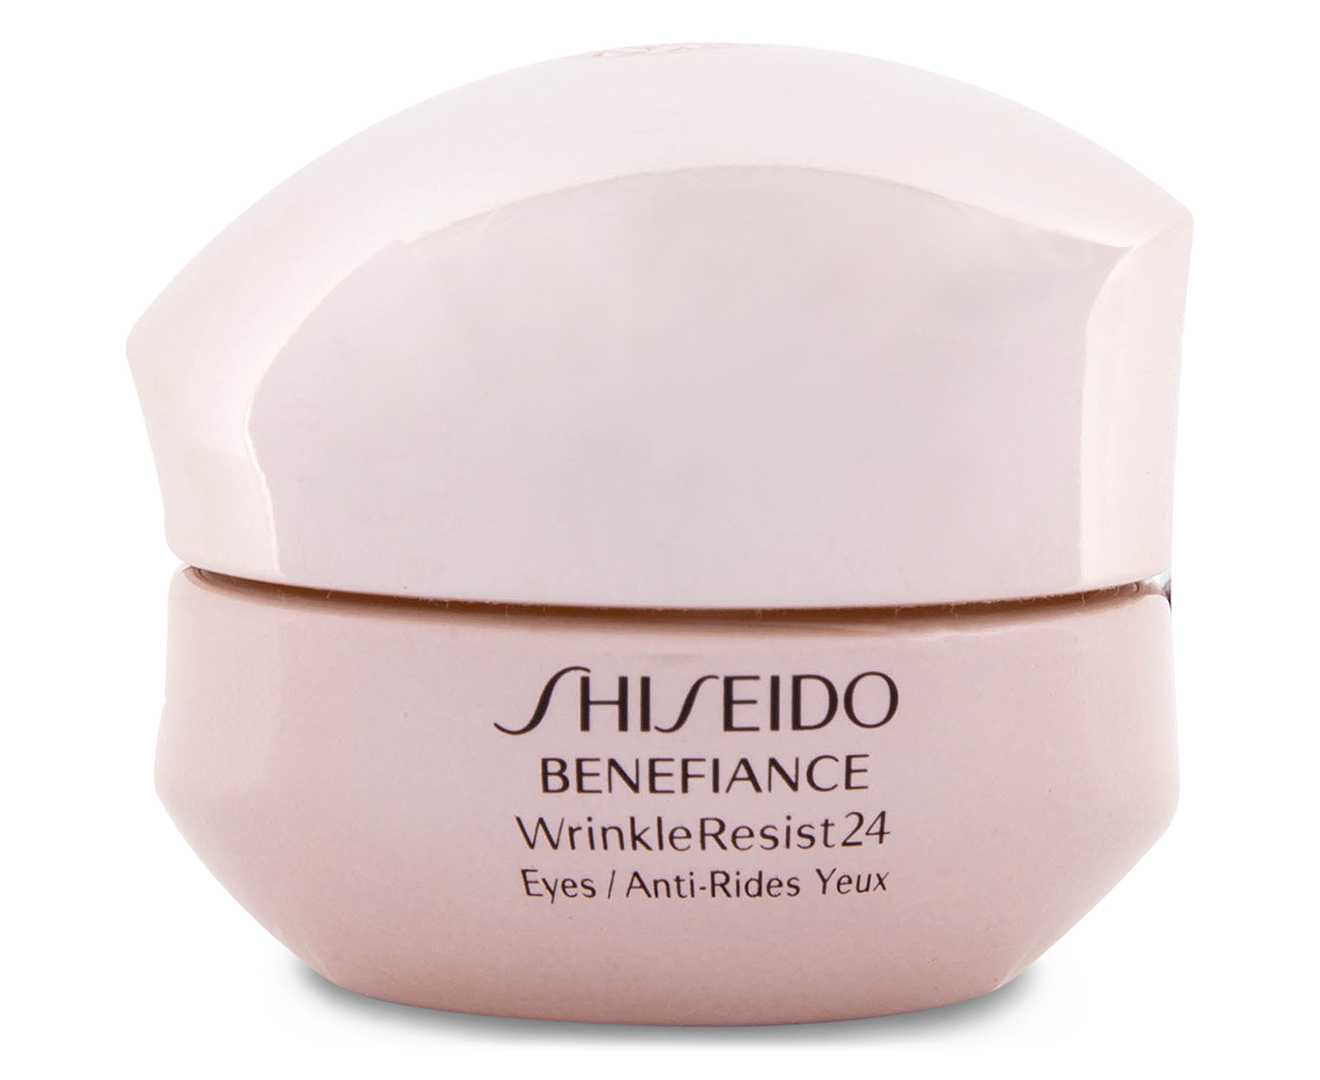 Крем shiseido benefiance. Shiseido крем для глаз Benefiance. Крем wrinkleresist24 от Shiseido. Shiseido Benefiance wrinkleresist24 Intensive Eye Contour Cream Creme Internet Anti-Rides yeux 2018. Shiseido Anti Wrinkle Cream.